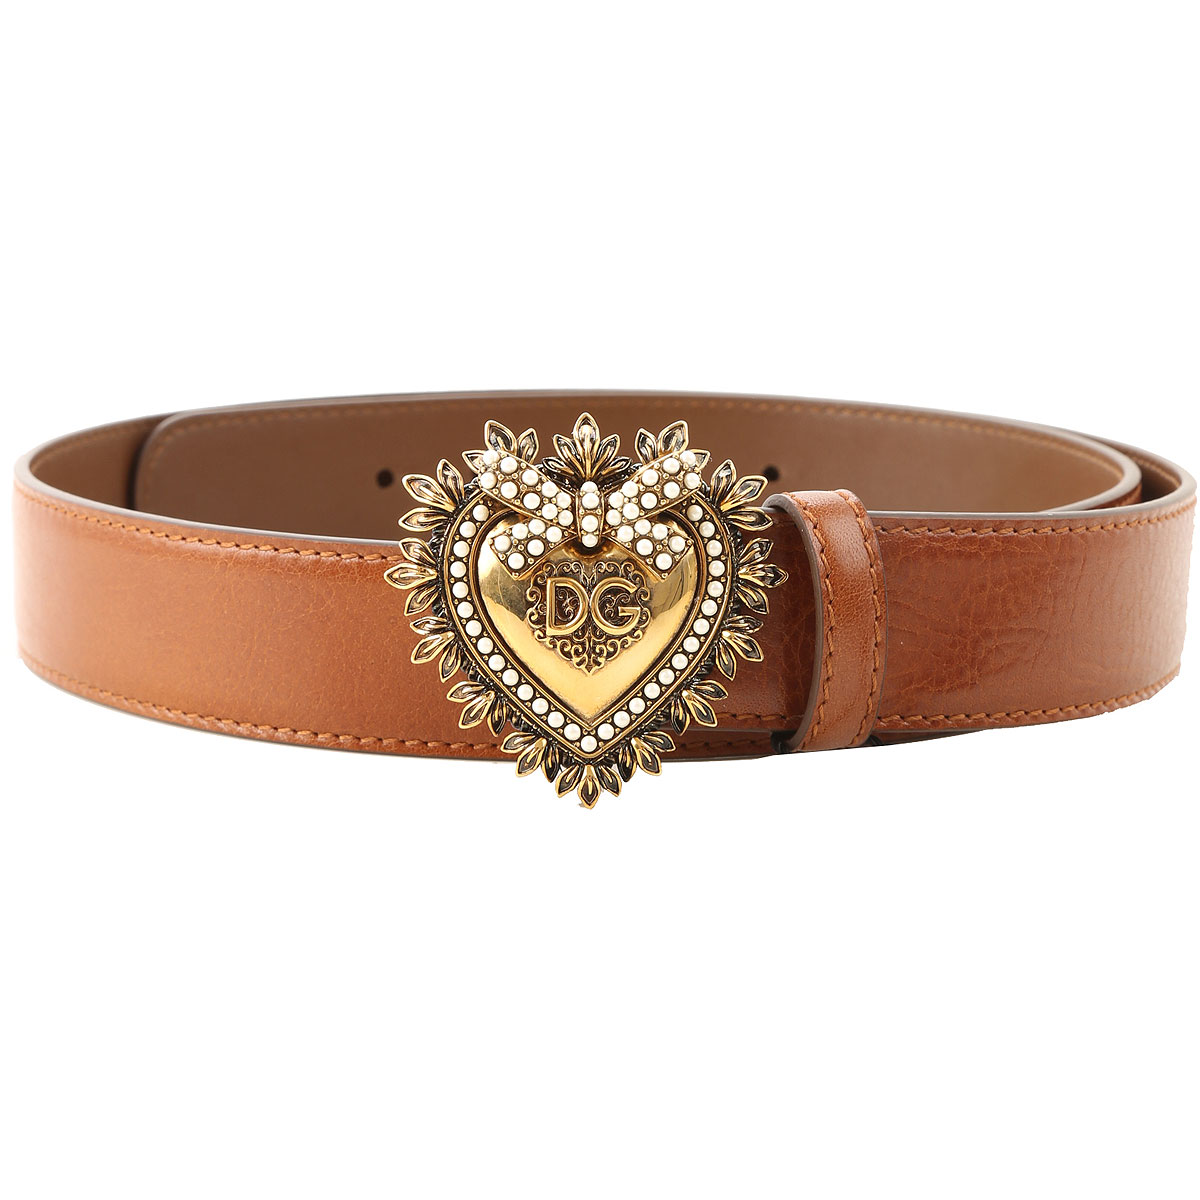 Womens Belts Dolce & Gabbana, Style code: be1315-ax059-8m308